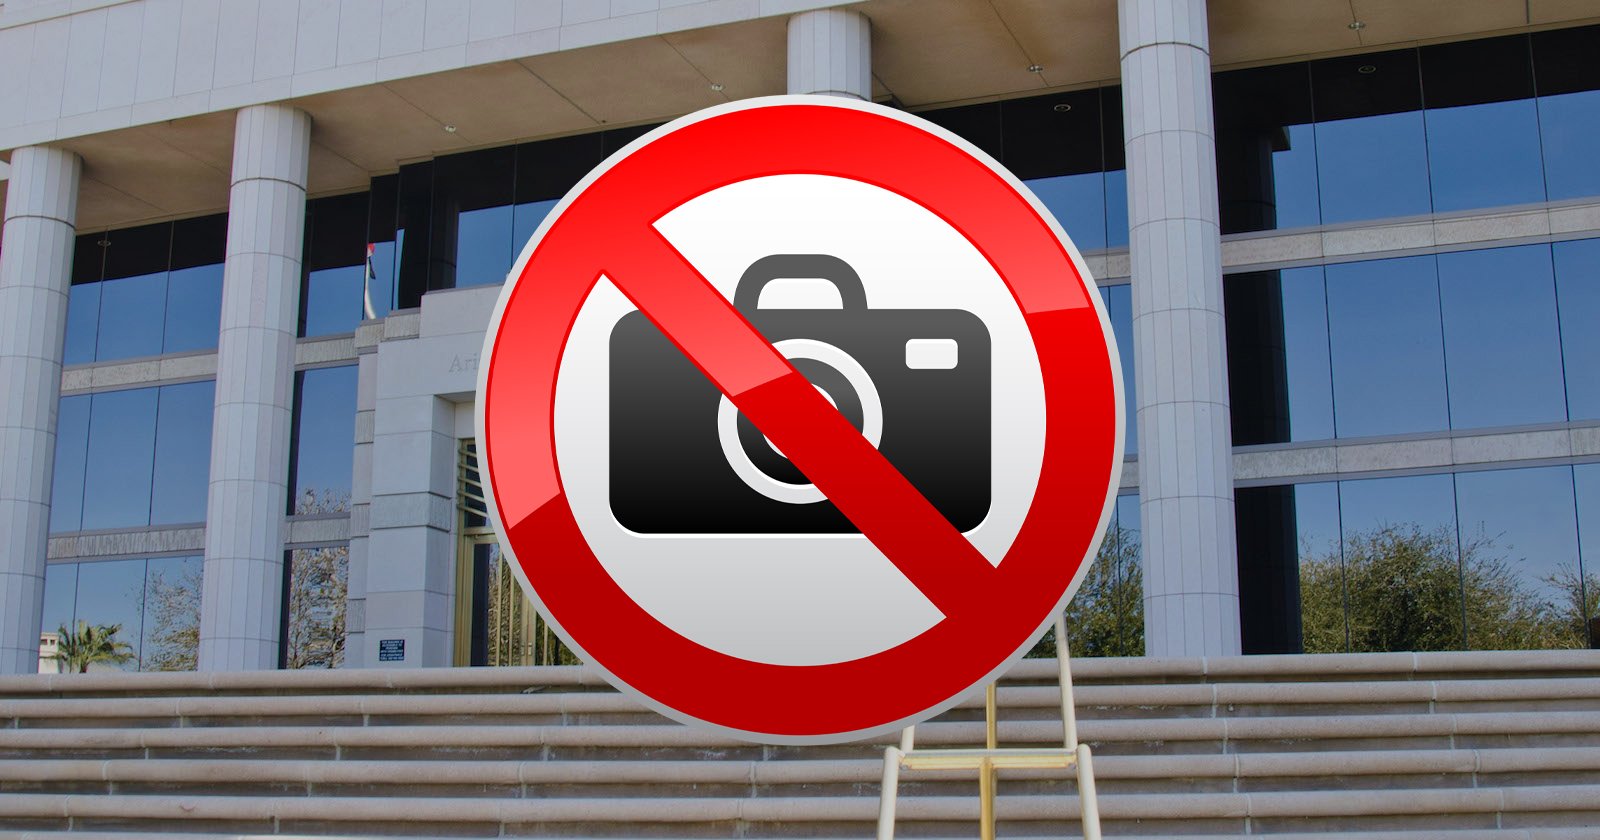 Photography Ban Outside AZ Supreme Court is Unconstitutional, Say Critics